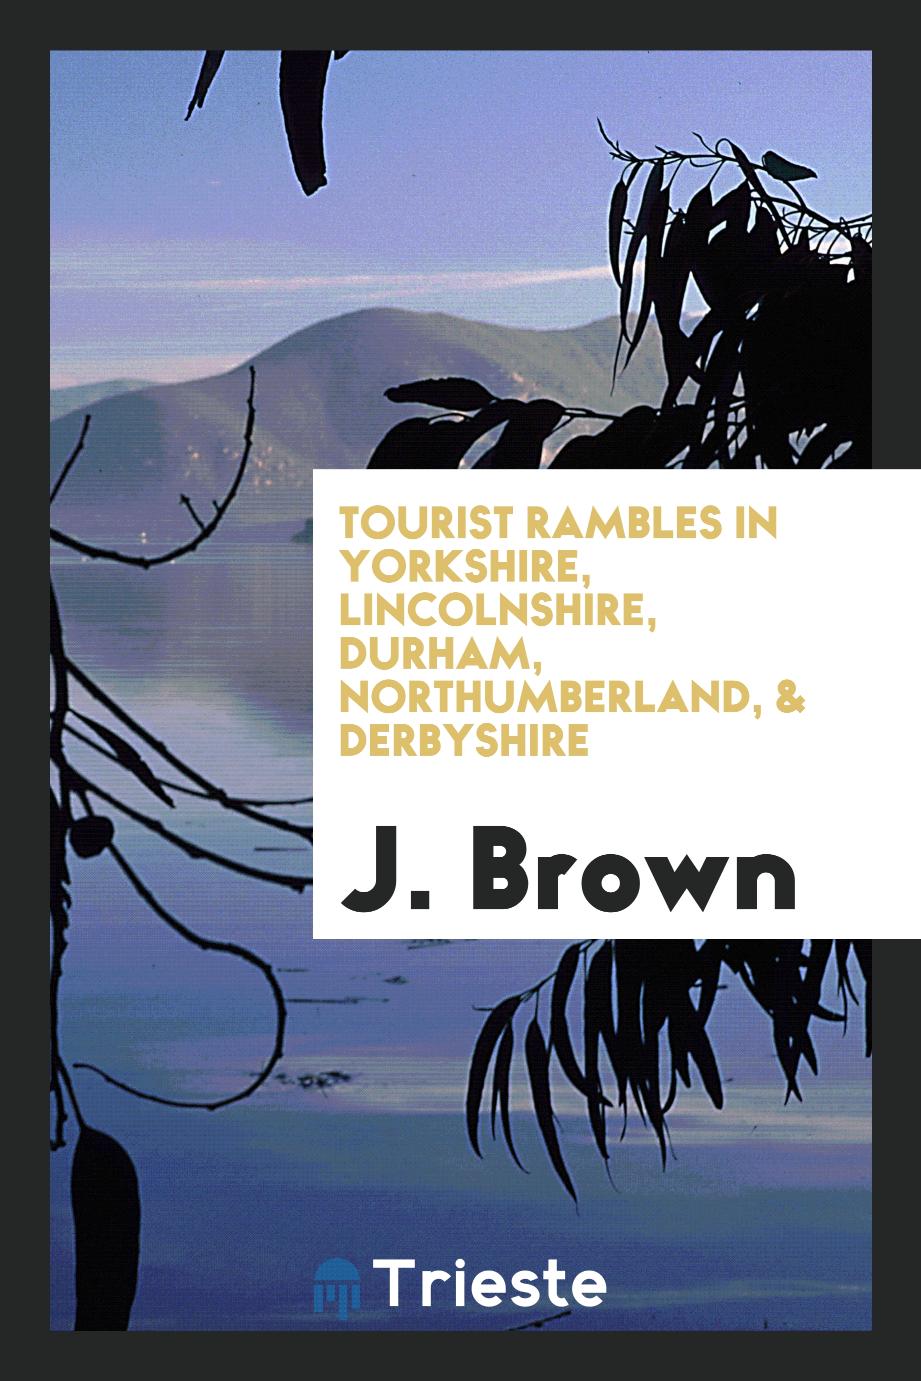 Tourist rambles in Yorkshire, Lincolnshire, Durham, Northumberland, & Derbyshire